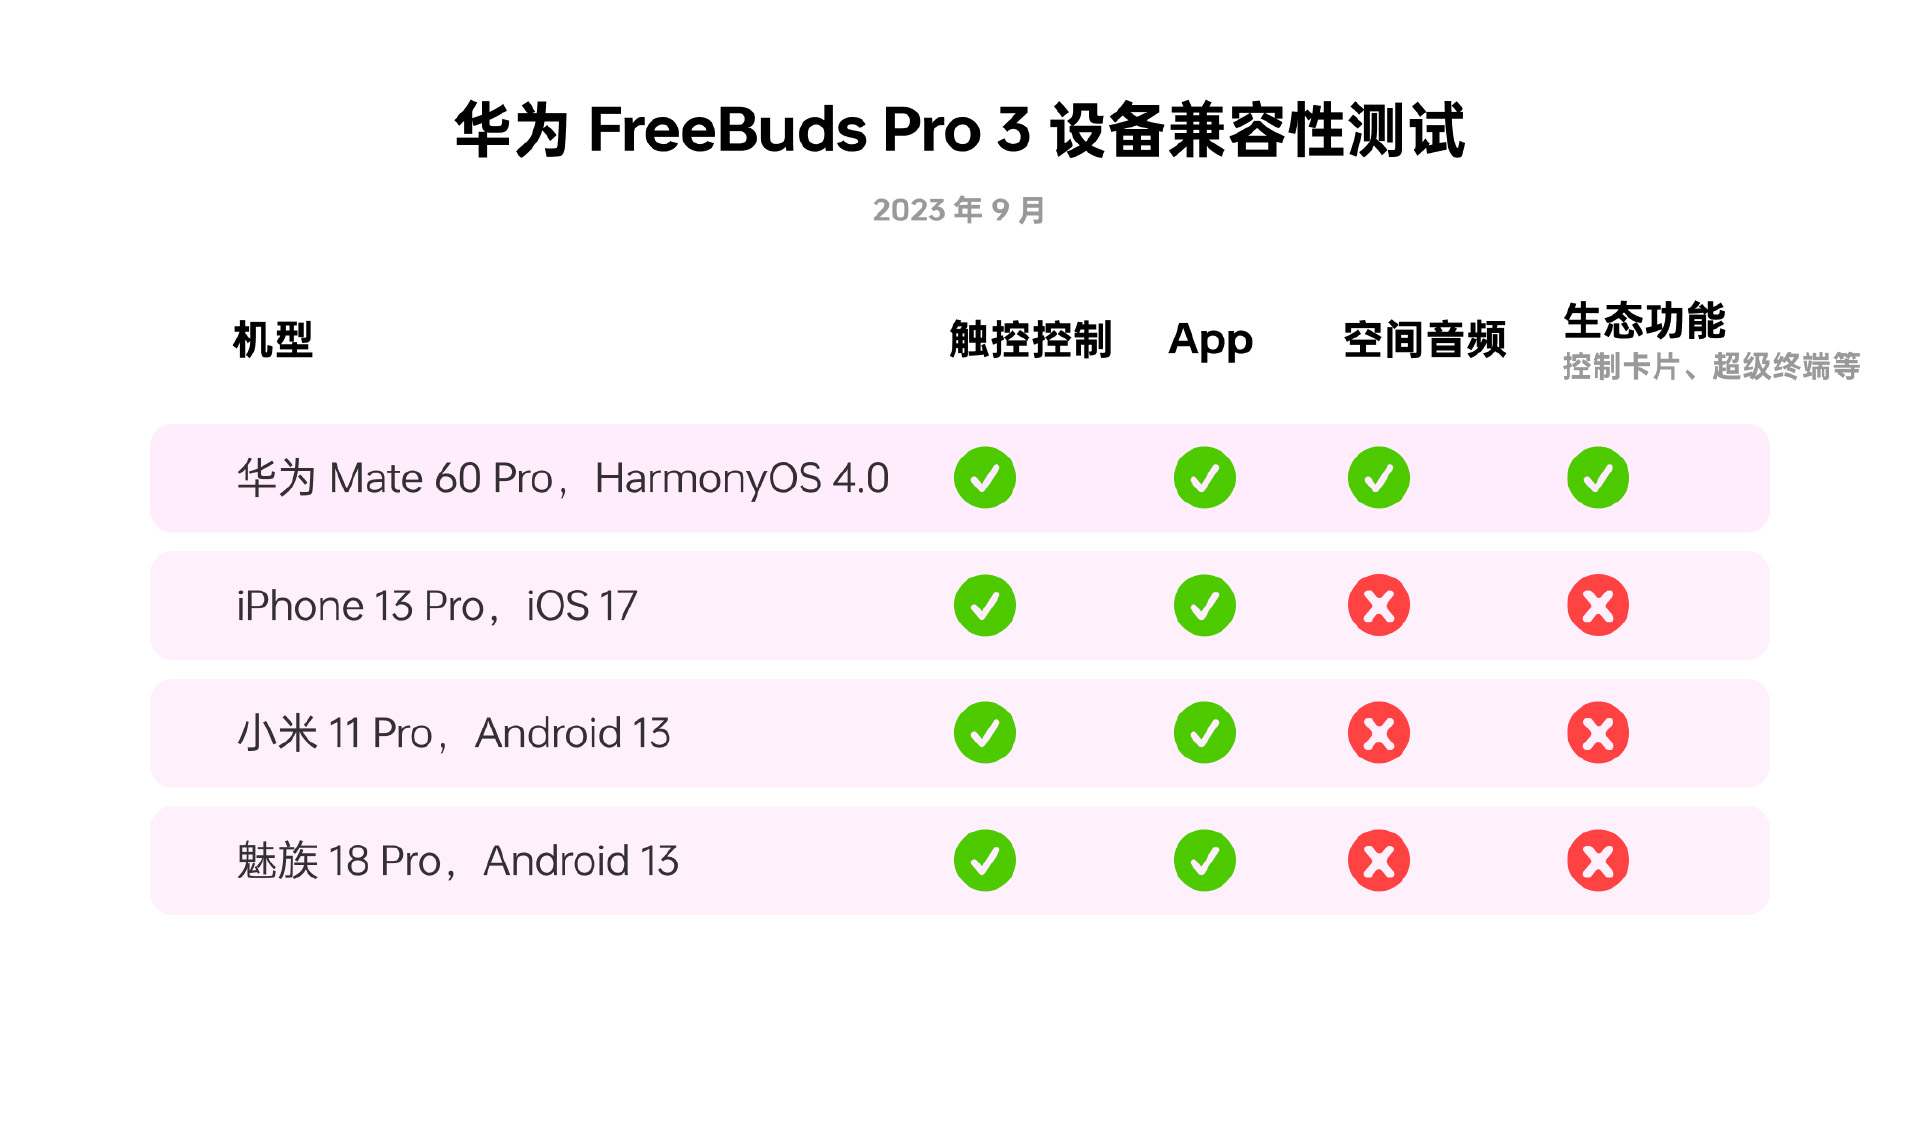 Huawei Freebuds Pro 3 review: Dual-driver dynamite